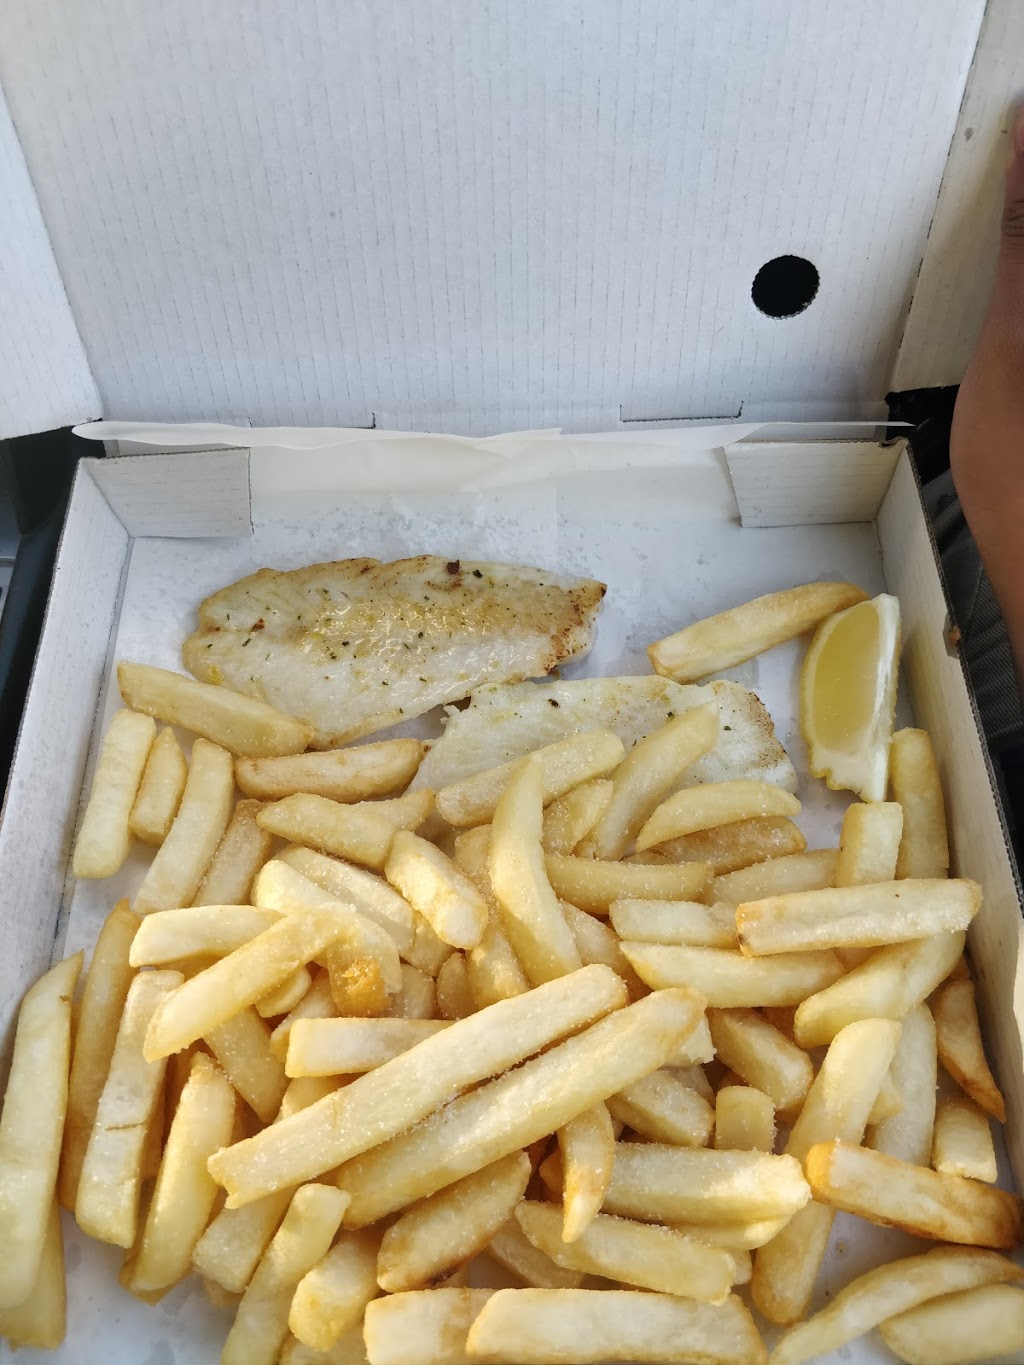 Harvey Fish And Chips | restaurant | 96 Uduc Rd, Harvey WA 6220, Australia | 0897291170 OR +61 8 9729 1170